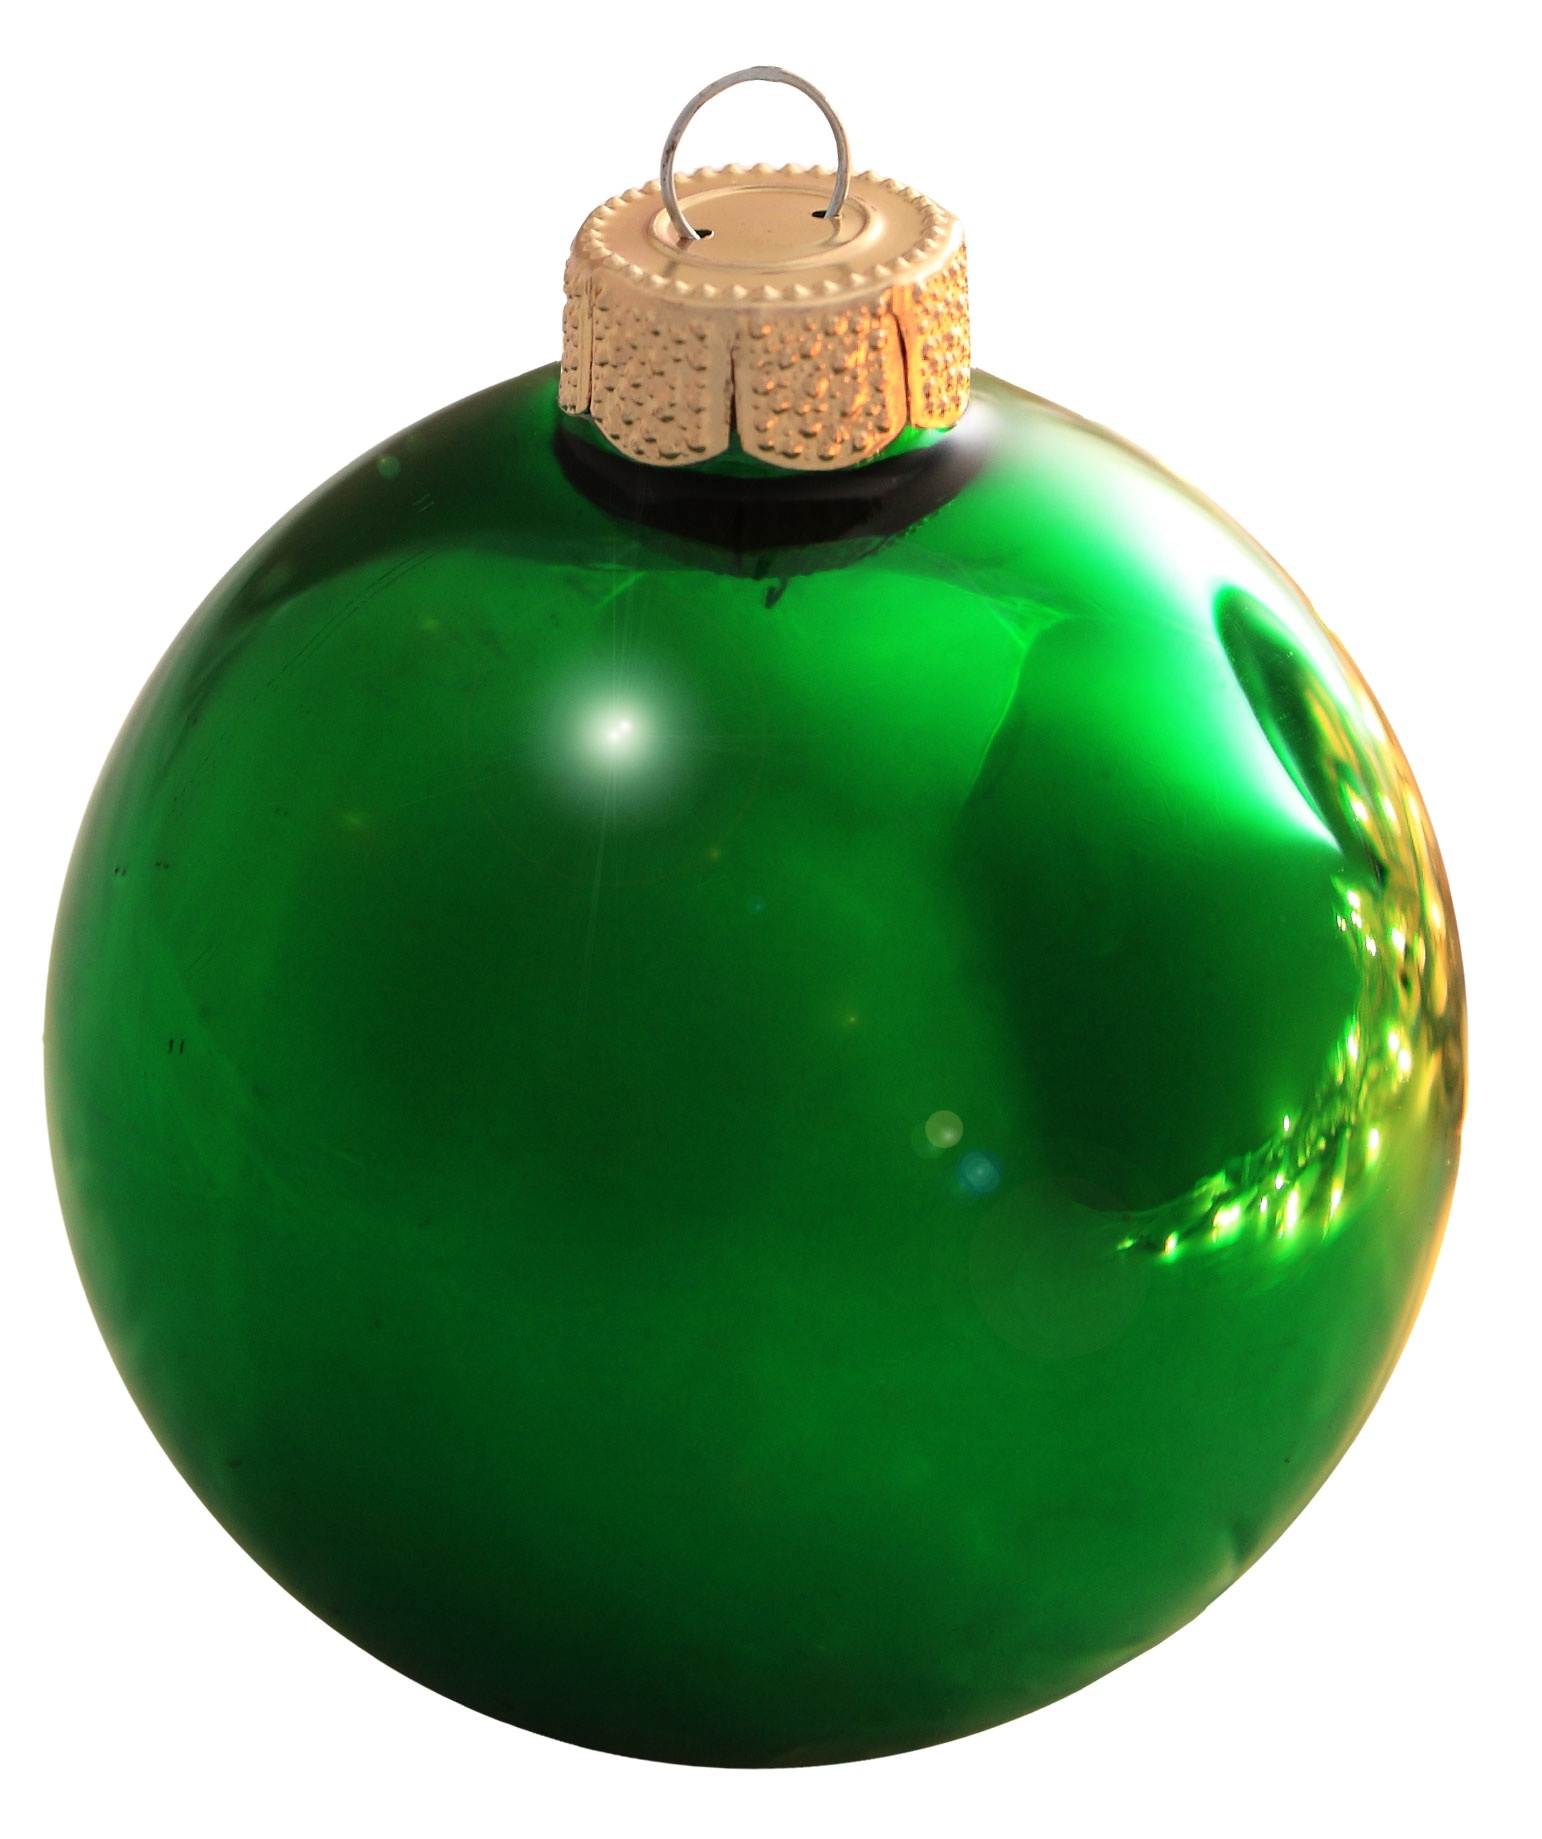 green ornament clipart - photo #33